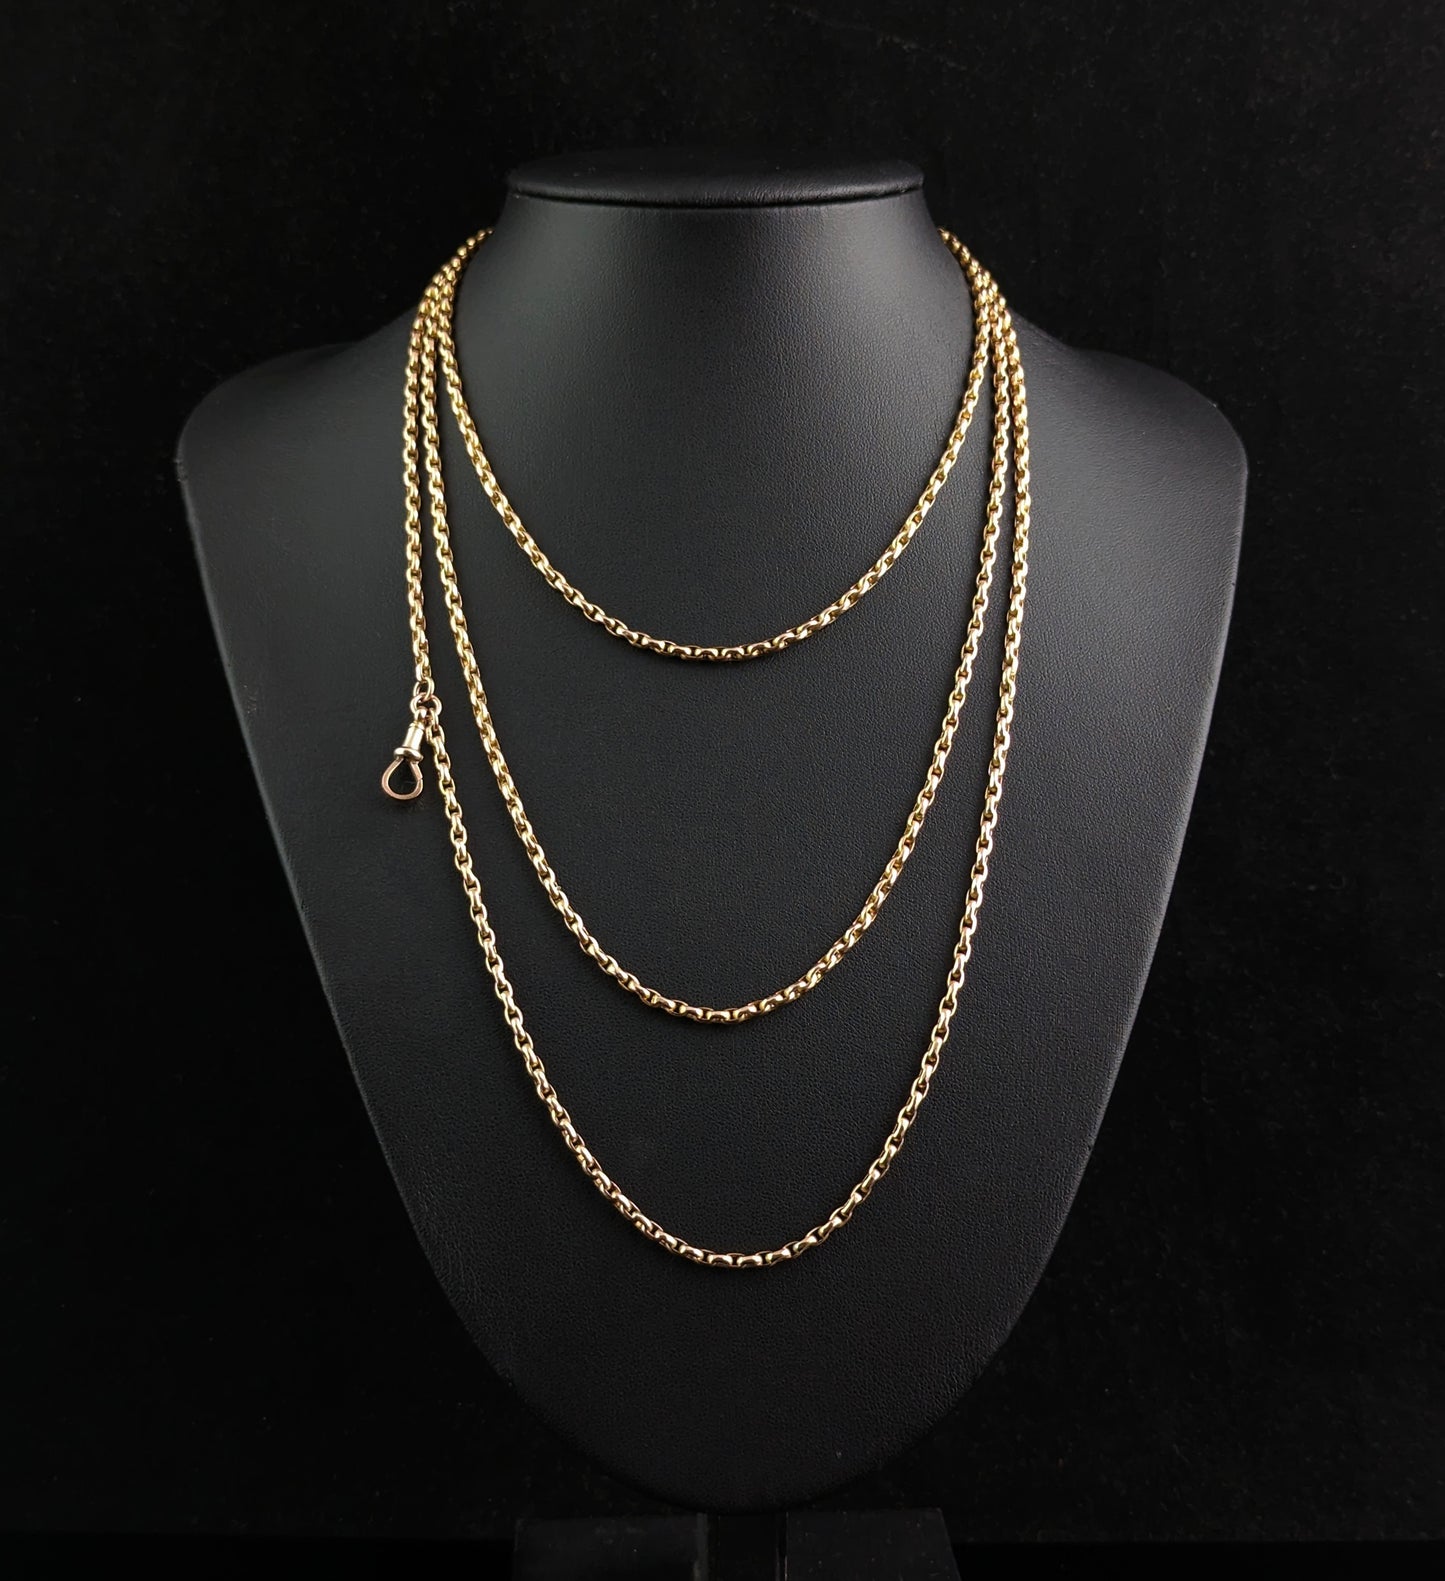 Antique 9k gold Long chain necklace, longuard, muff chsin, Victorian